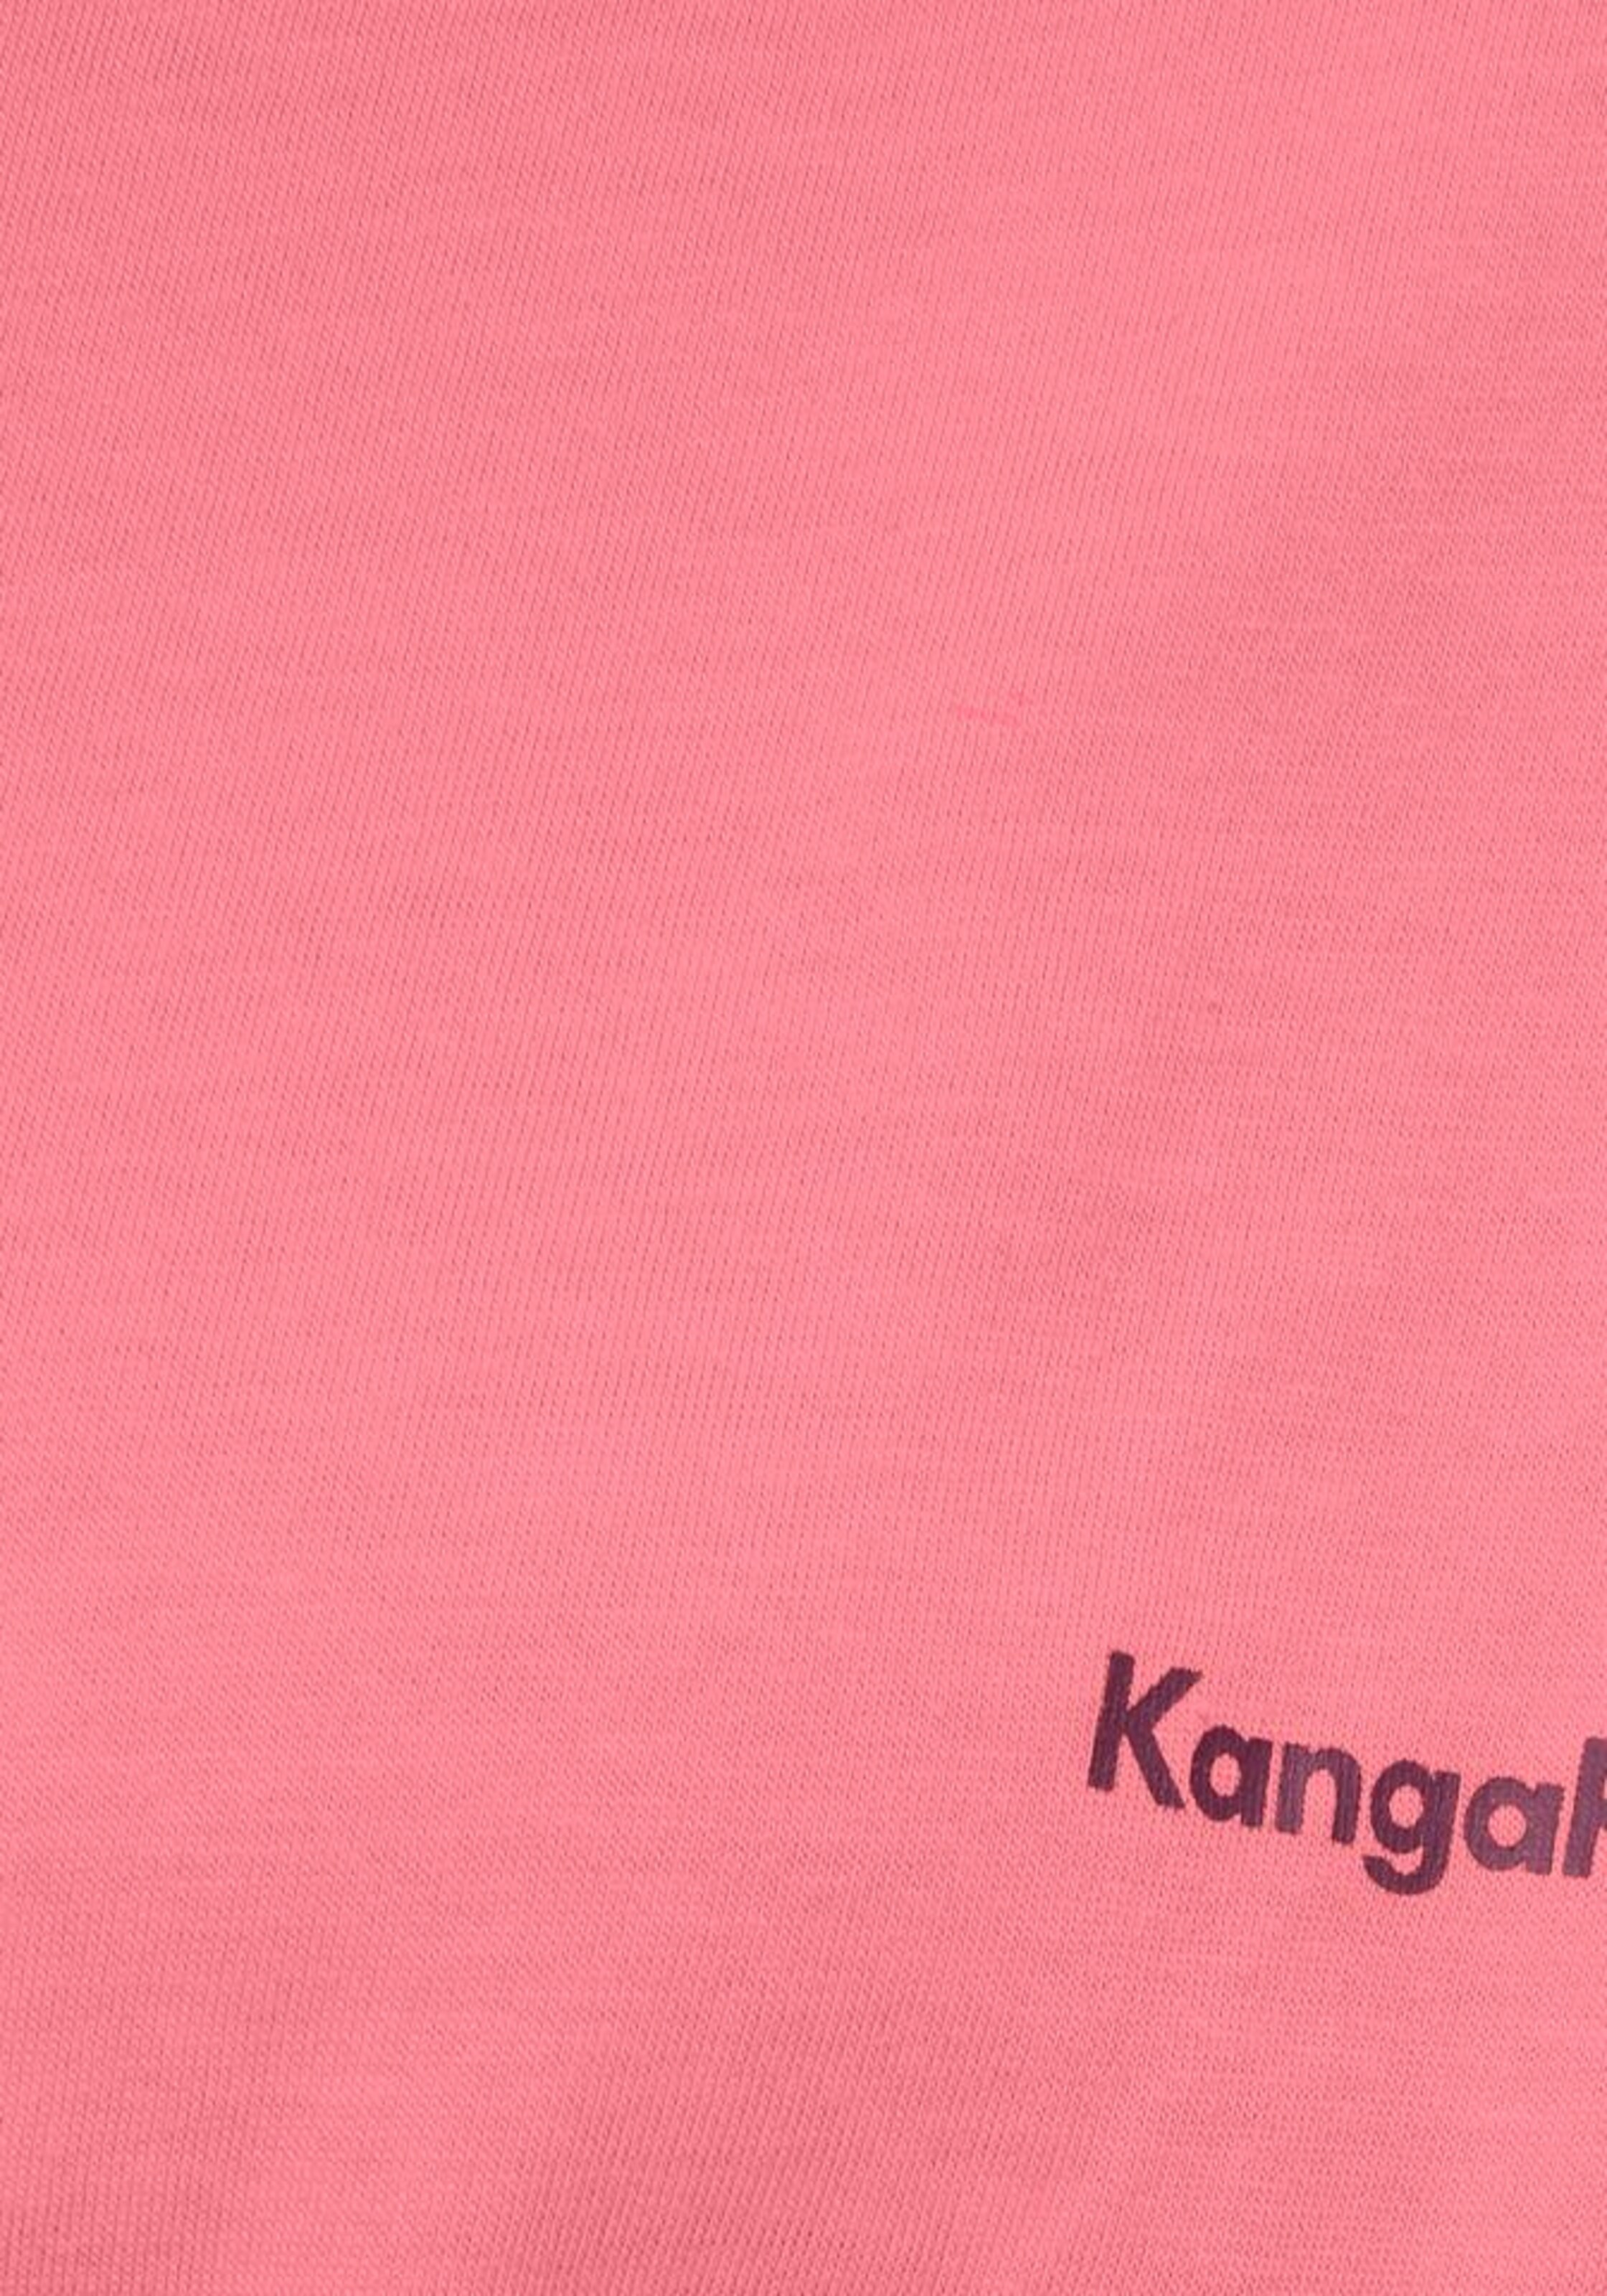 Frauen Große Größen KangaROOS Shirtkleid in Pitaya - JI06380